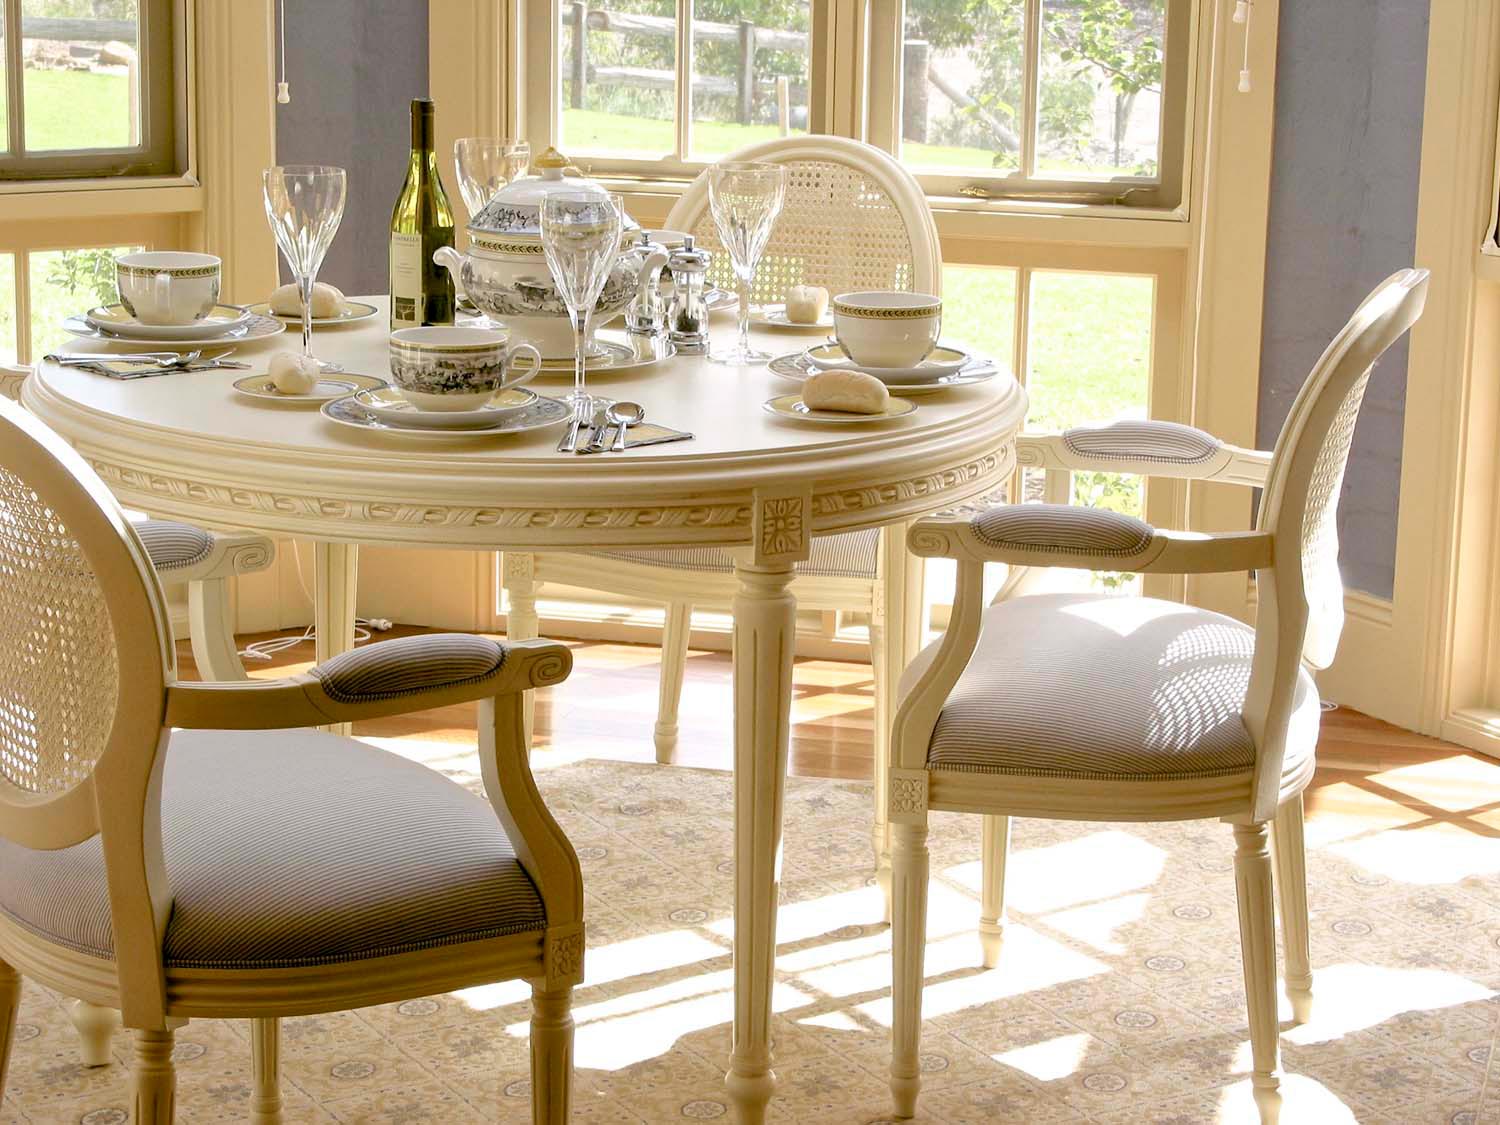 15 French dining interior design